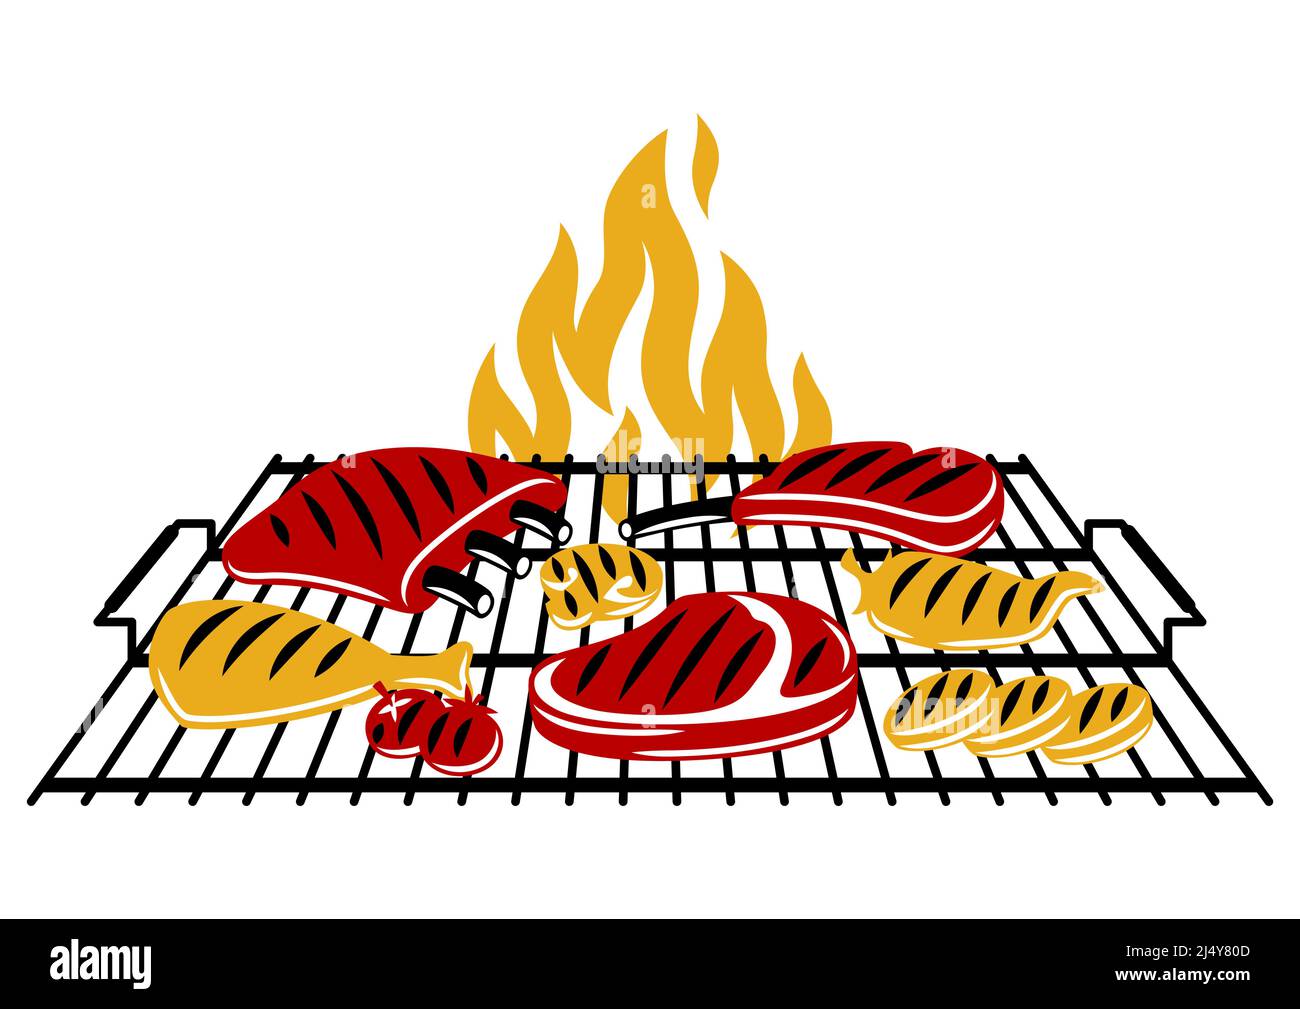 Barbecue grill menu icon vector Banque d'images vectorielles - Page 2 -  Alamy